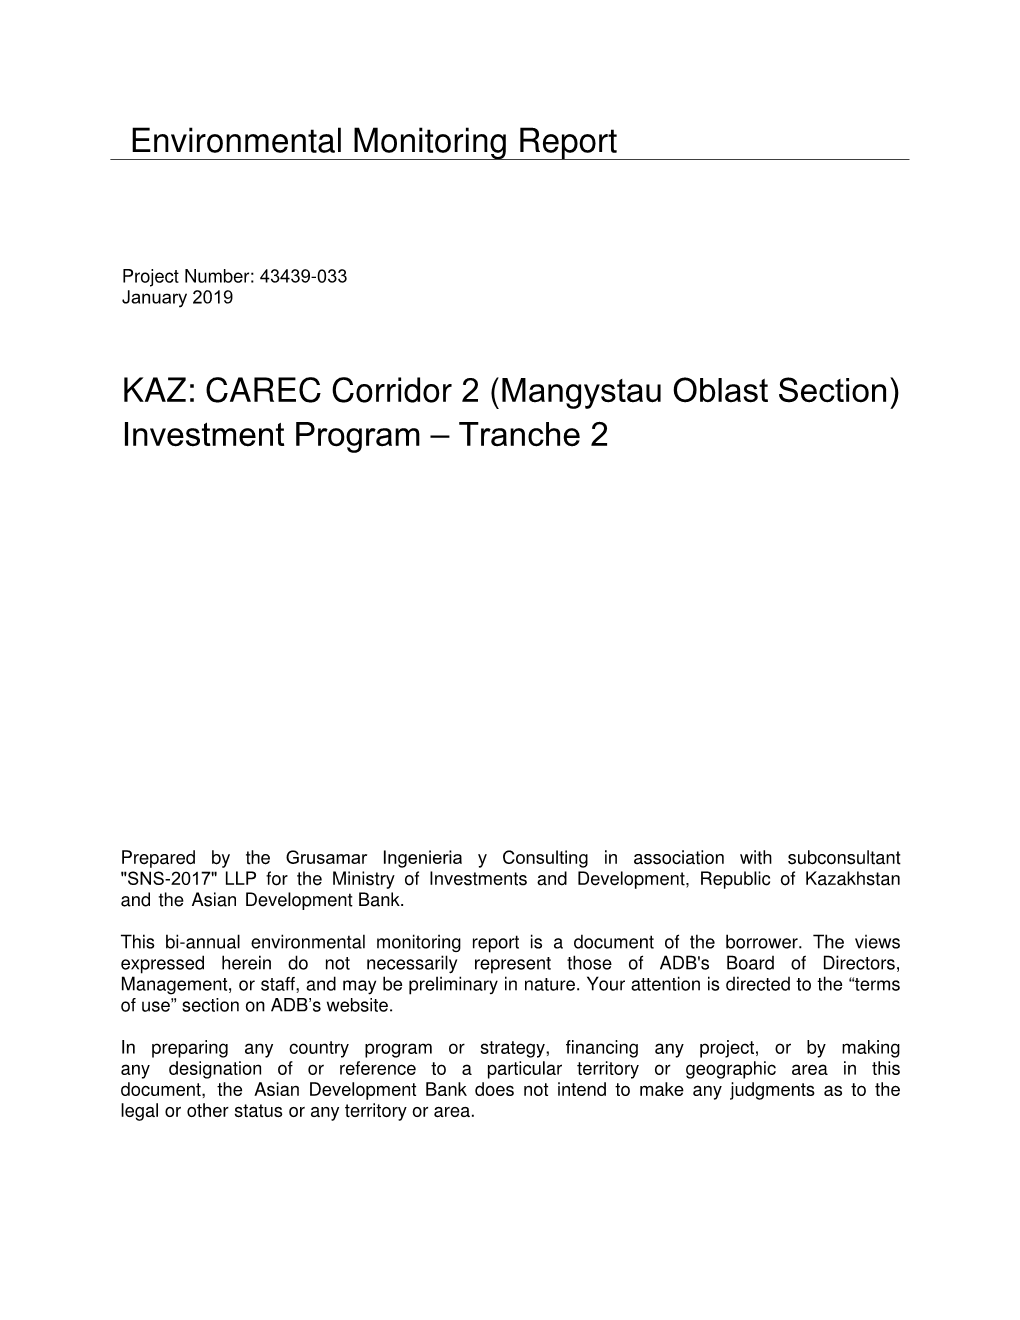 CAREC Corridor 2 (Mangystau Oblast Section) Investment Program – Tranche 2